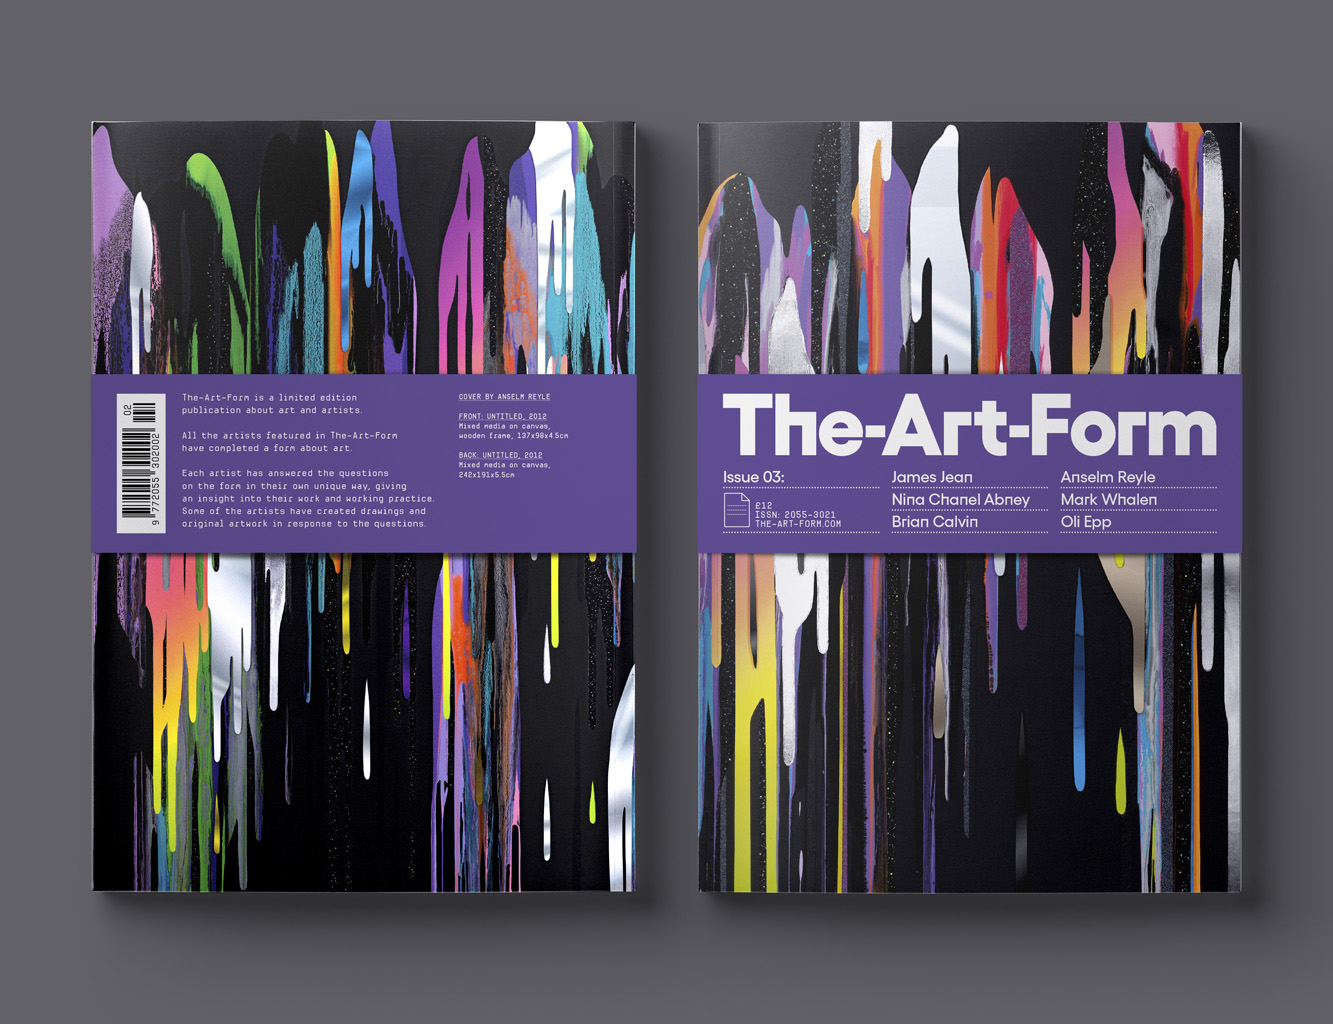 The-Art-Form magazine — The-Art-Form